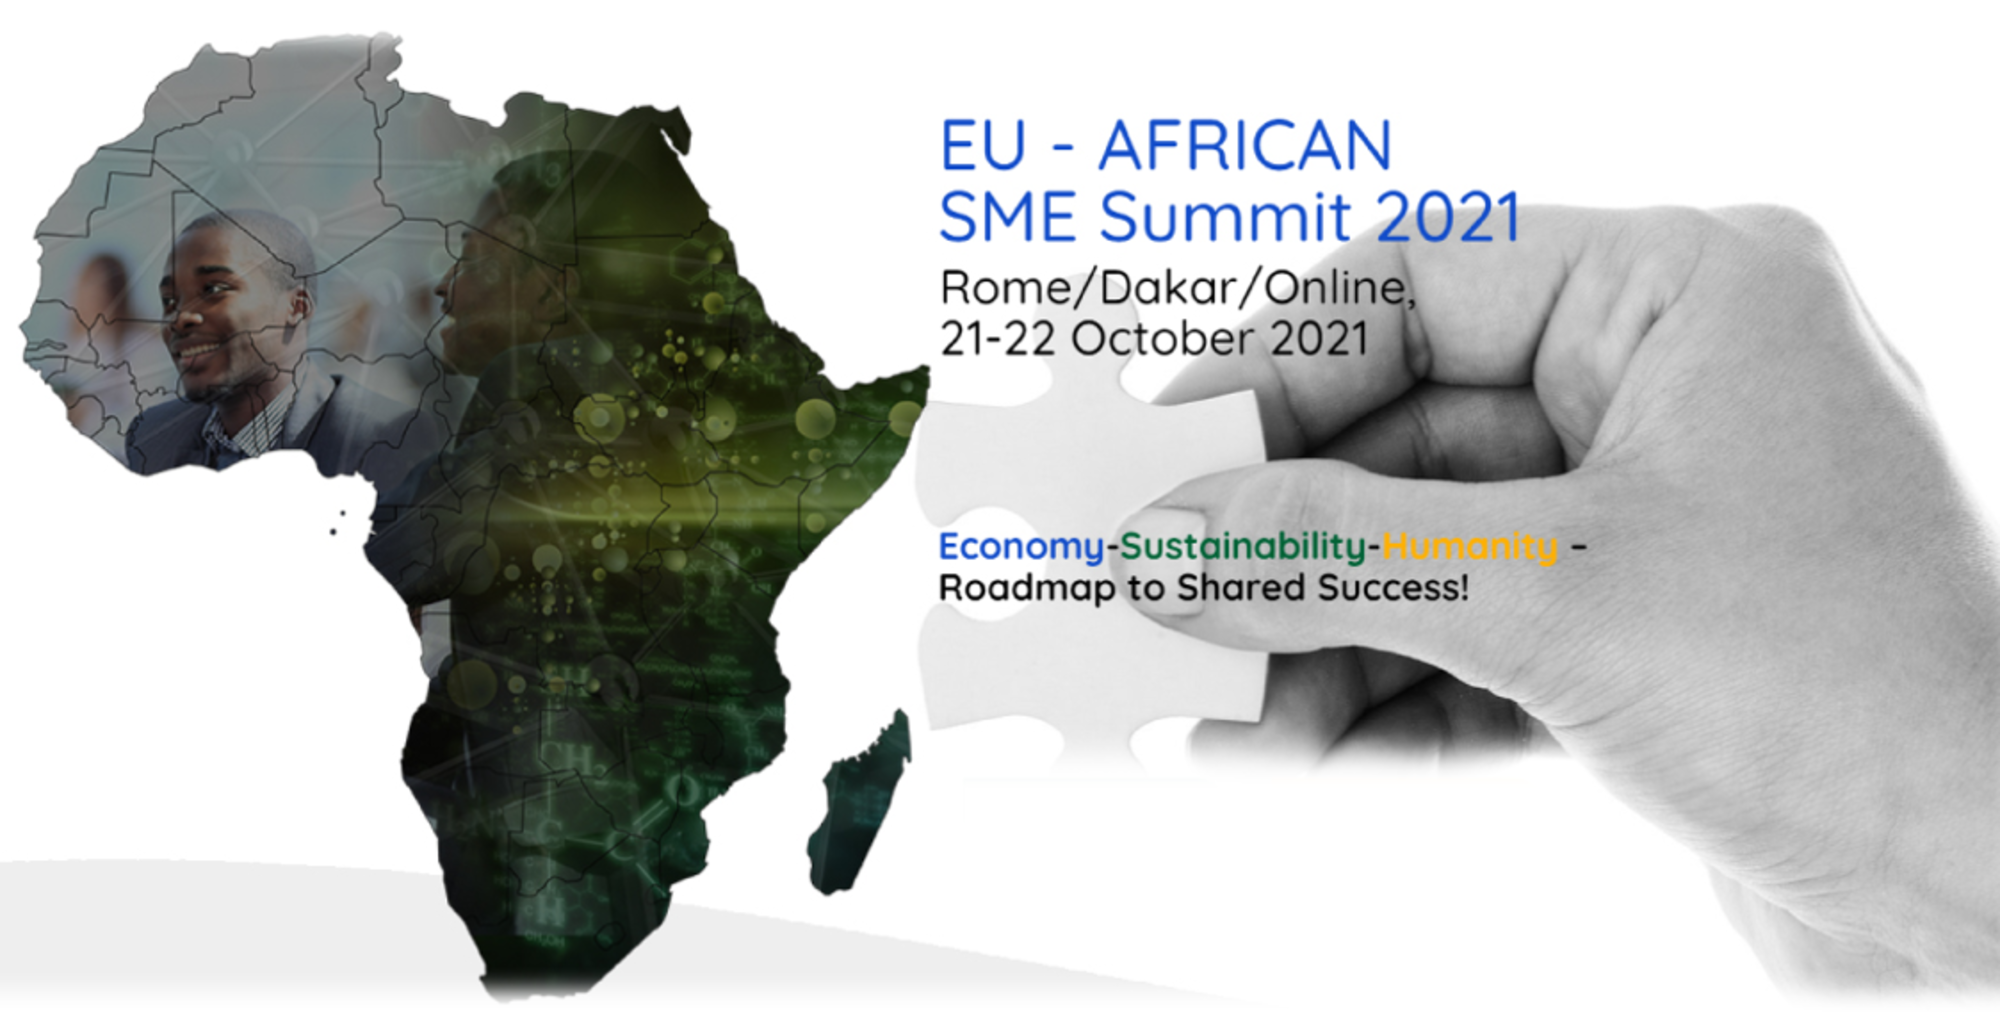 21-22 October 2021: EU-Africa Summit "Economy-Sustainability-Humanity", Roadmap to shared success